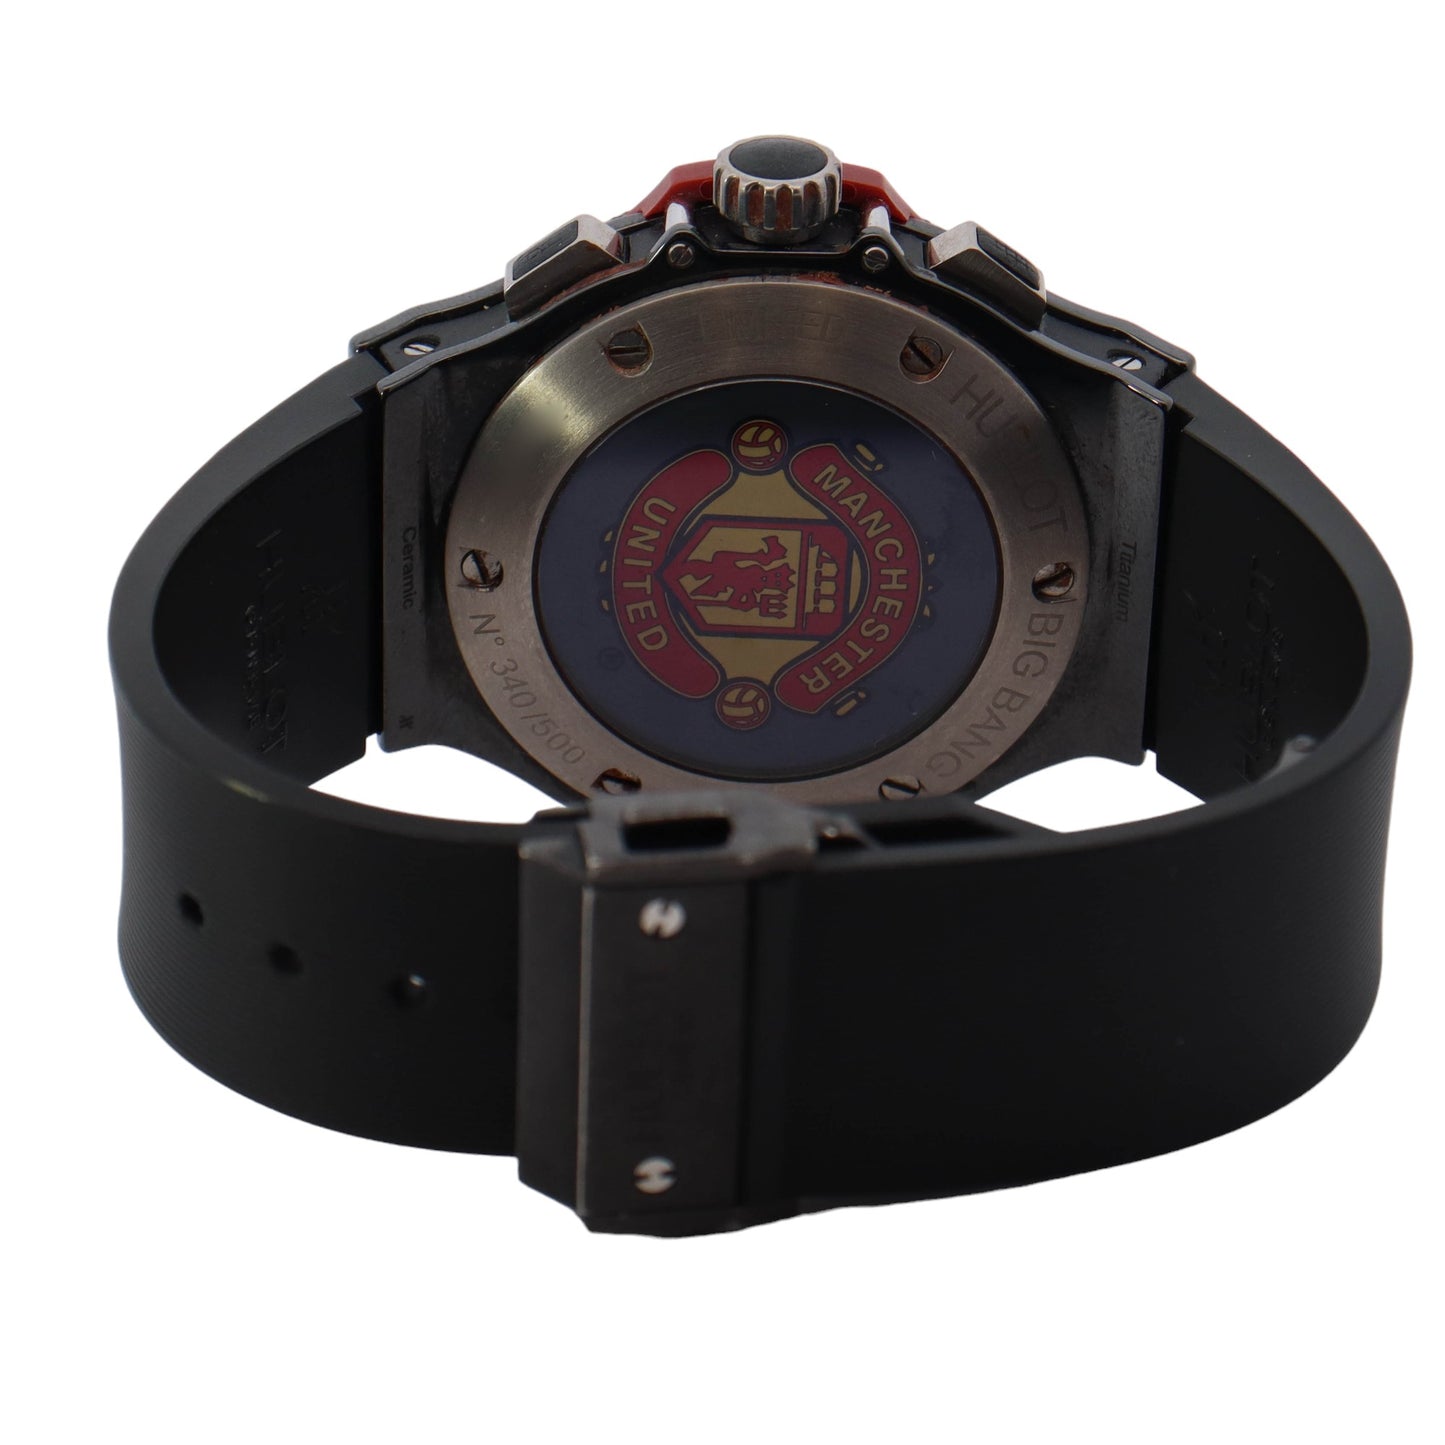 Hublot Big Bang "Red Devil" Black Ceramic 44mm Black Stick Dial Watch Reference #:  318.CM.1190.RX.MAN08 - Happy Jewelers Fine Jewelry Lifetime Warranty